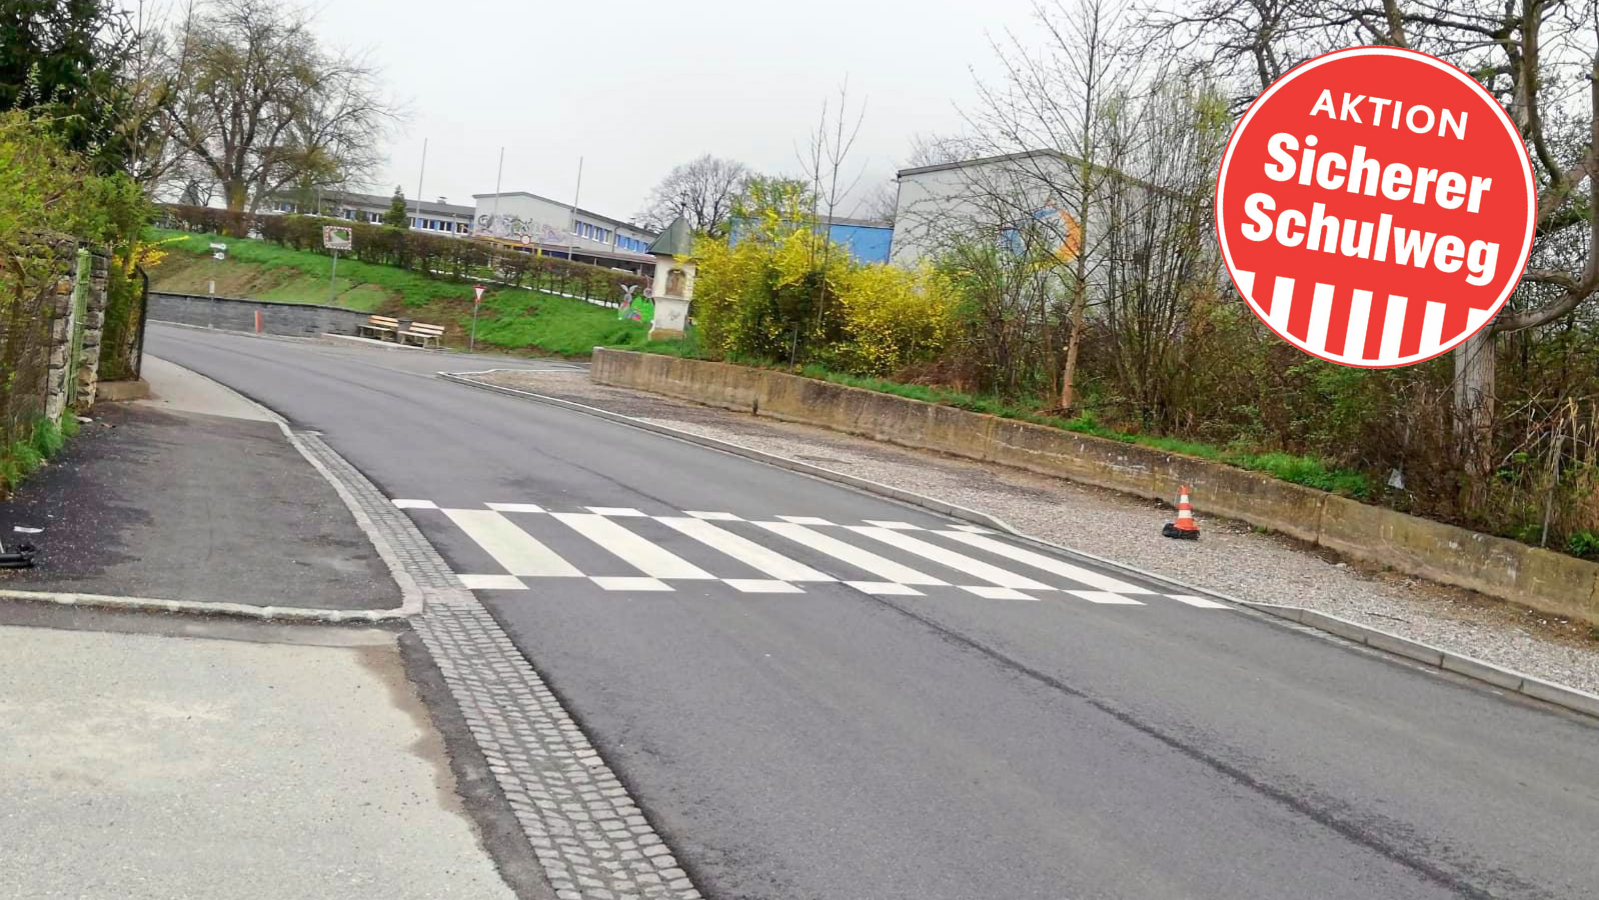 The new crosswalk should offer protection! (Bild: zvg)